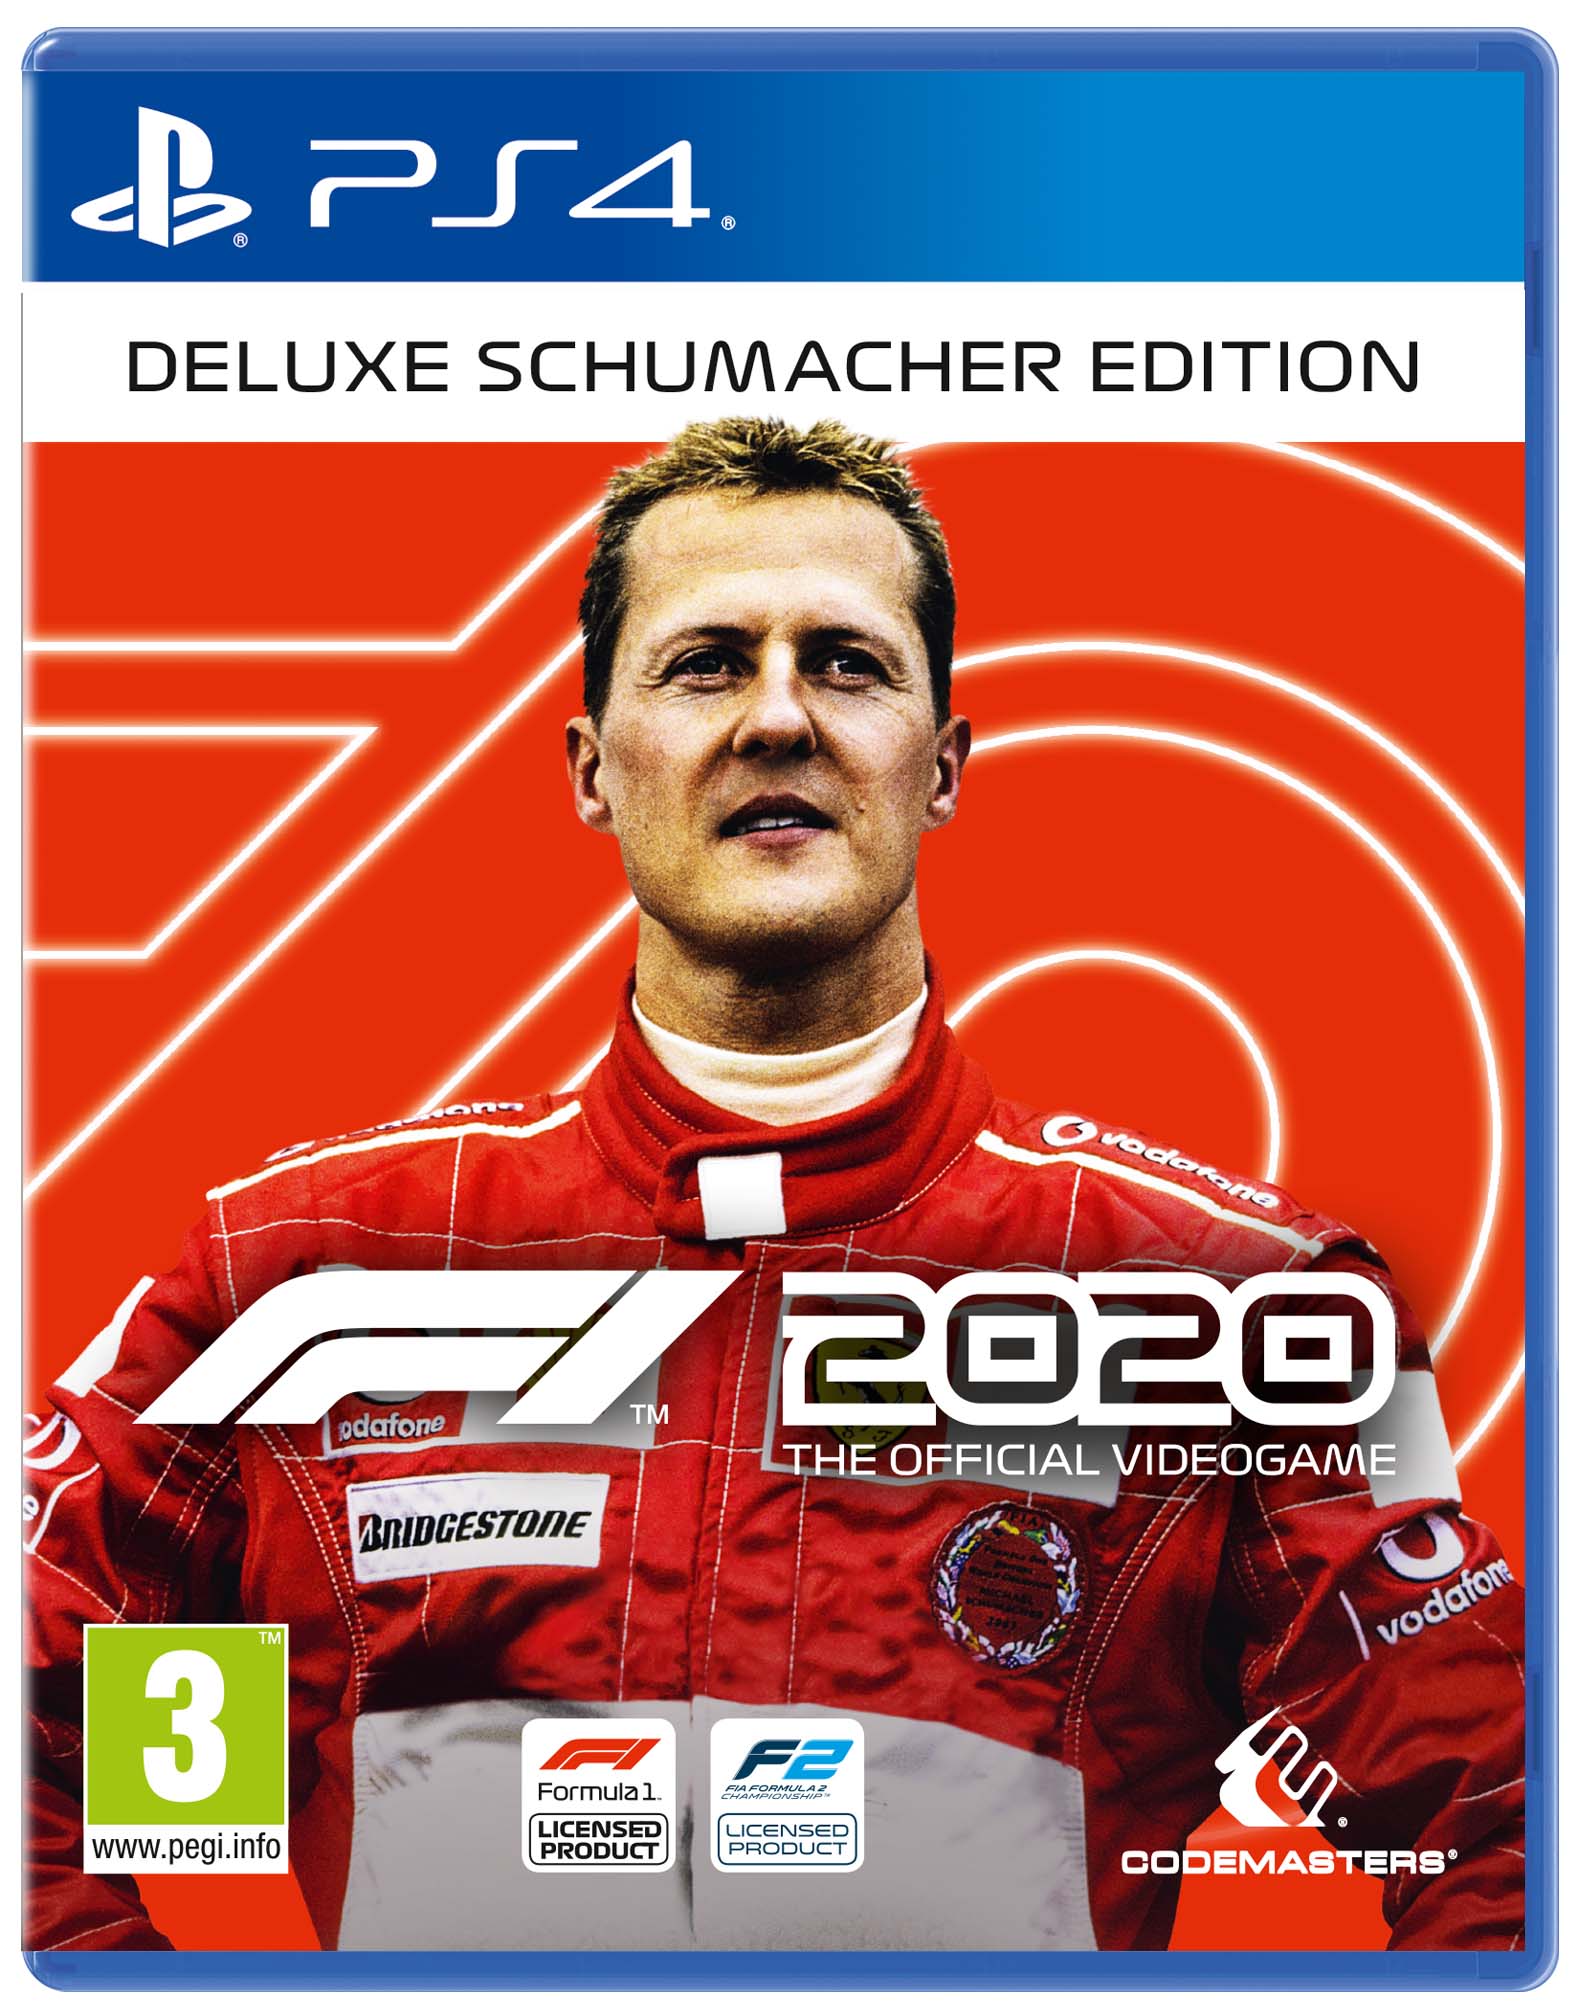 F1 2020 Schumacher Edition PS4